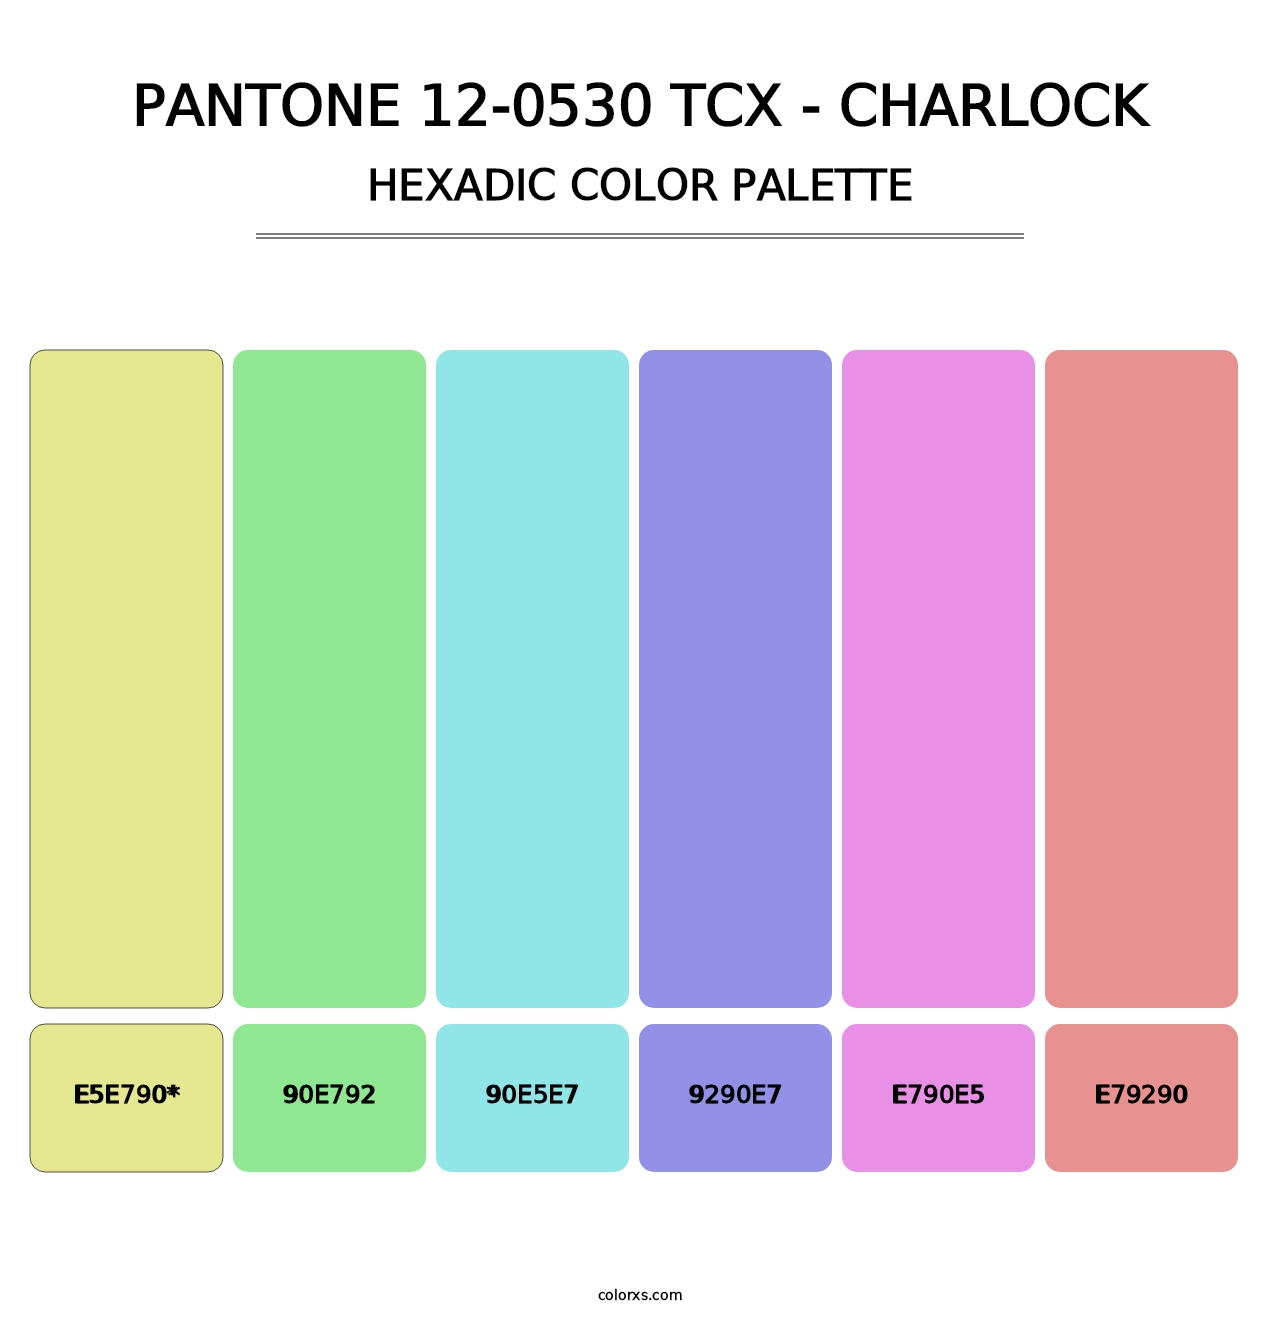 PANTONE 12-0530 TCX - Charlock - Hexadic Color Palette